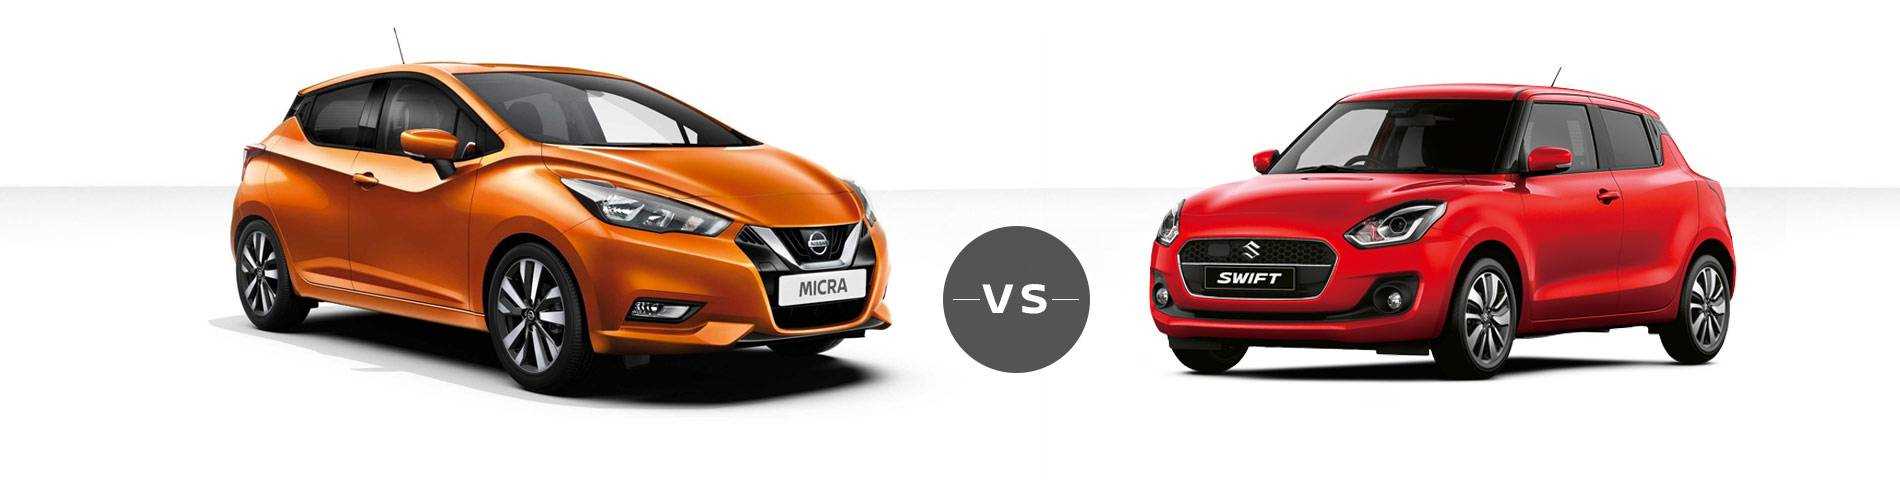 Nissan Micra vs Suzuki Swift